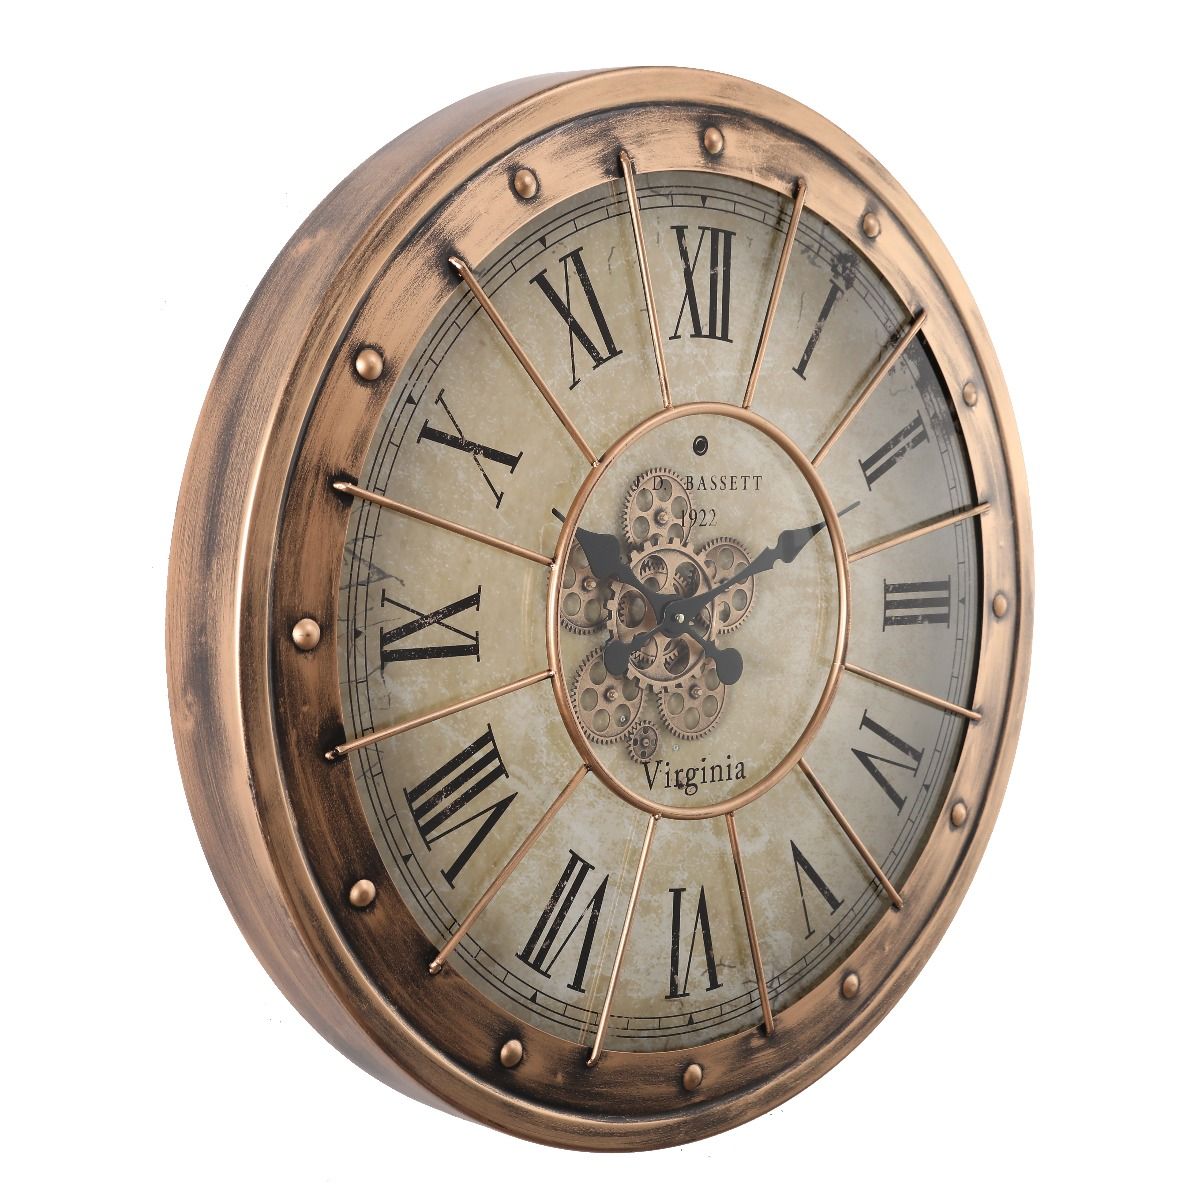 Industrial/vintage-inspired clock range - MODEL 017